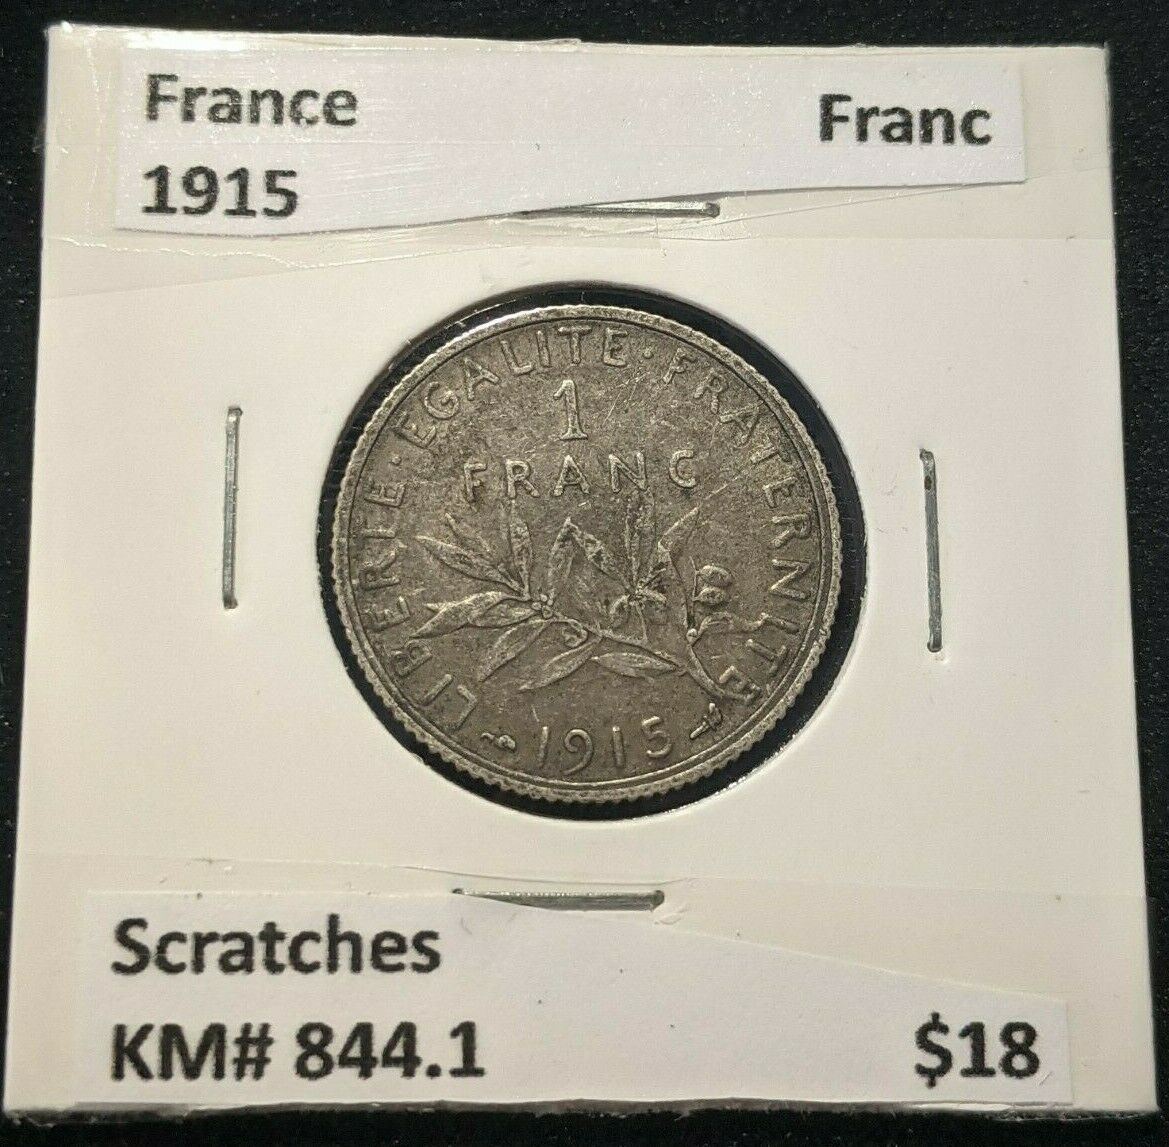 France 1915 Franc KM# 844.1 Scratches #247